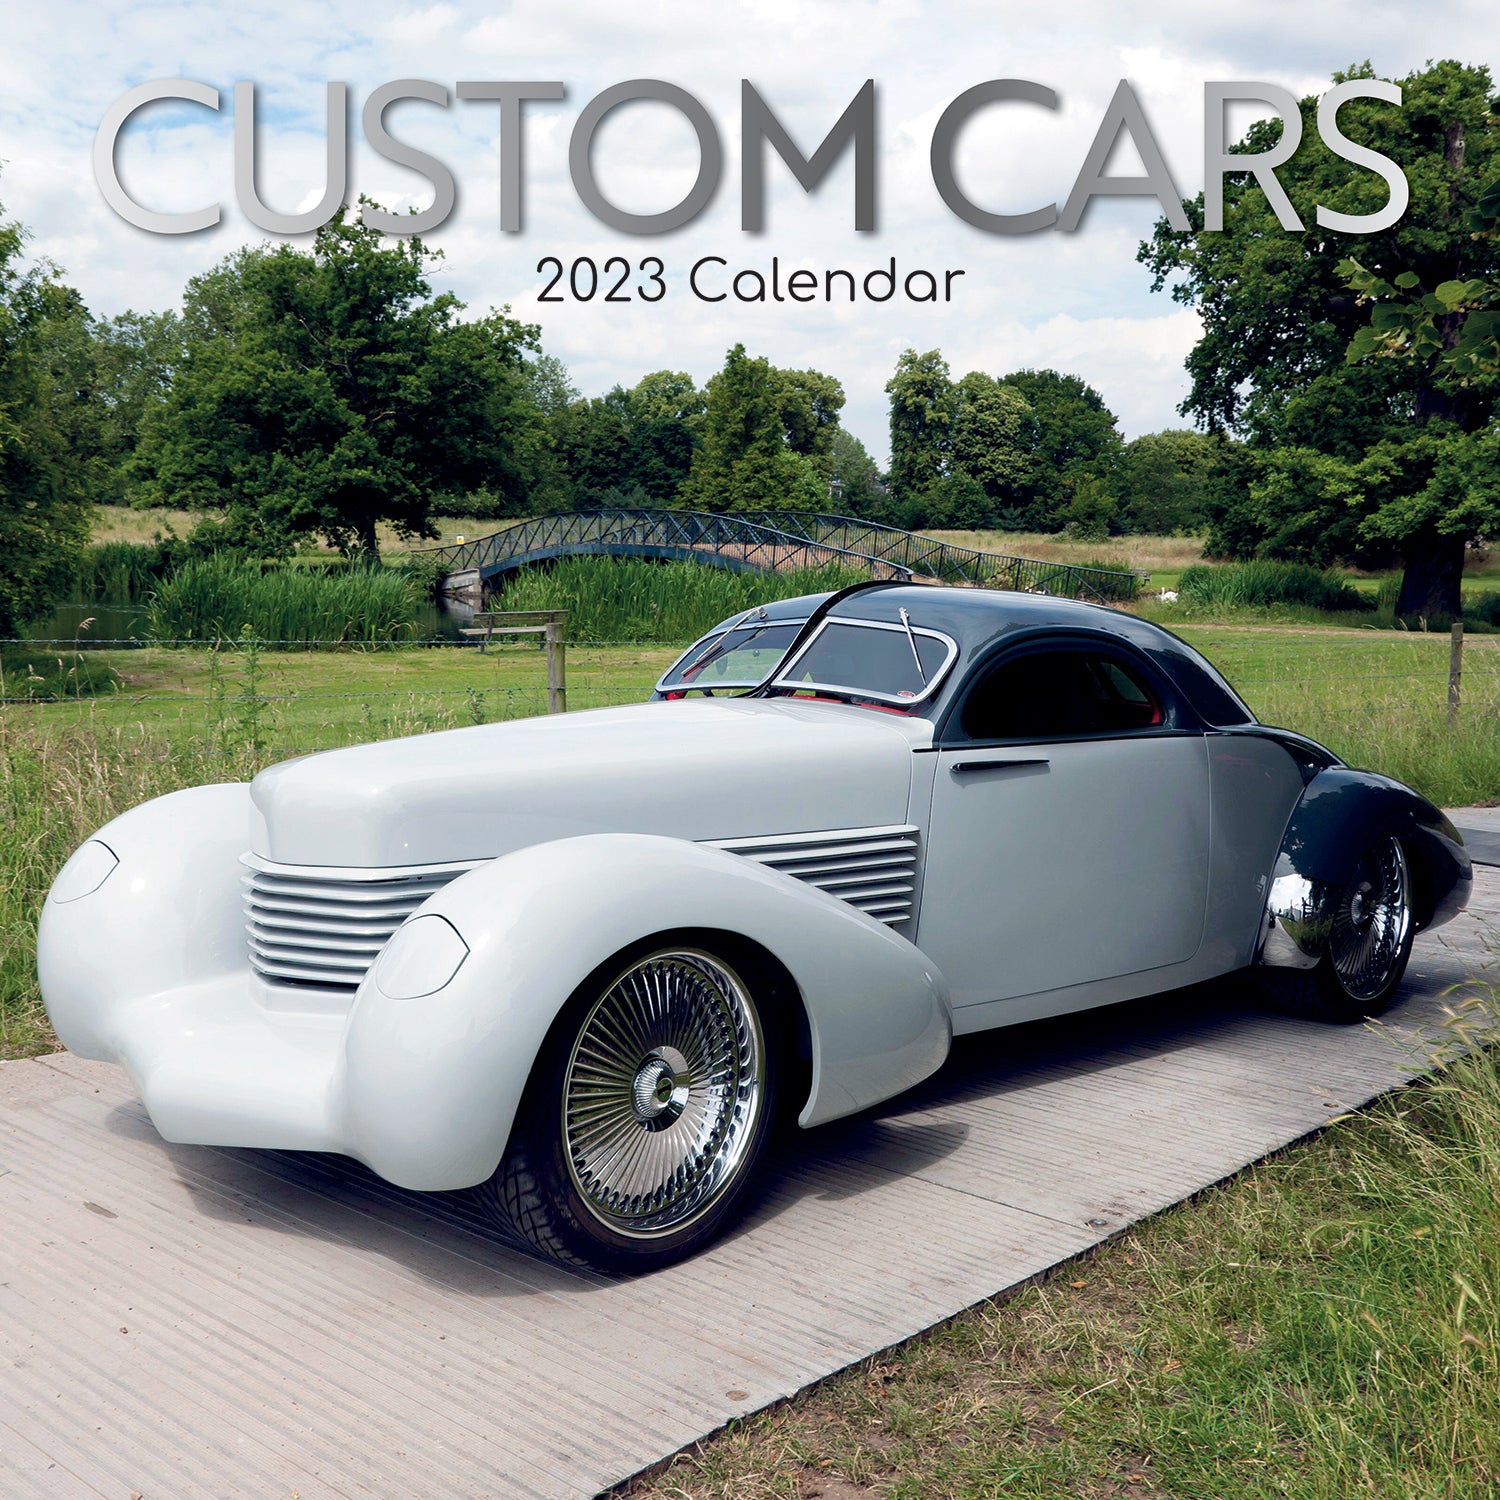 Custom Cars - 2023 Square Wall Calendar 16 Month Planner Christmas New Year Gift - Zmart Australia